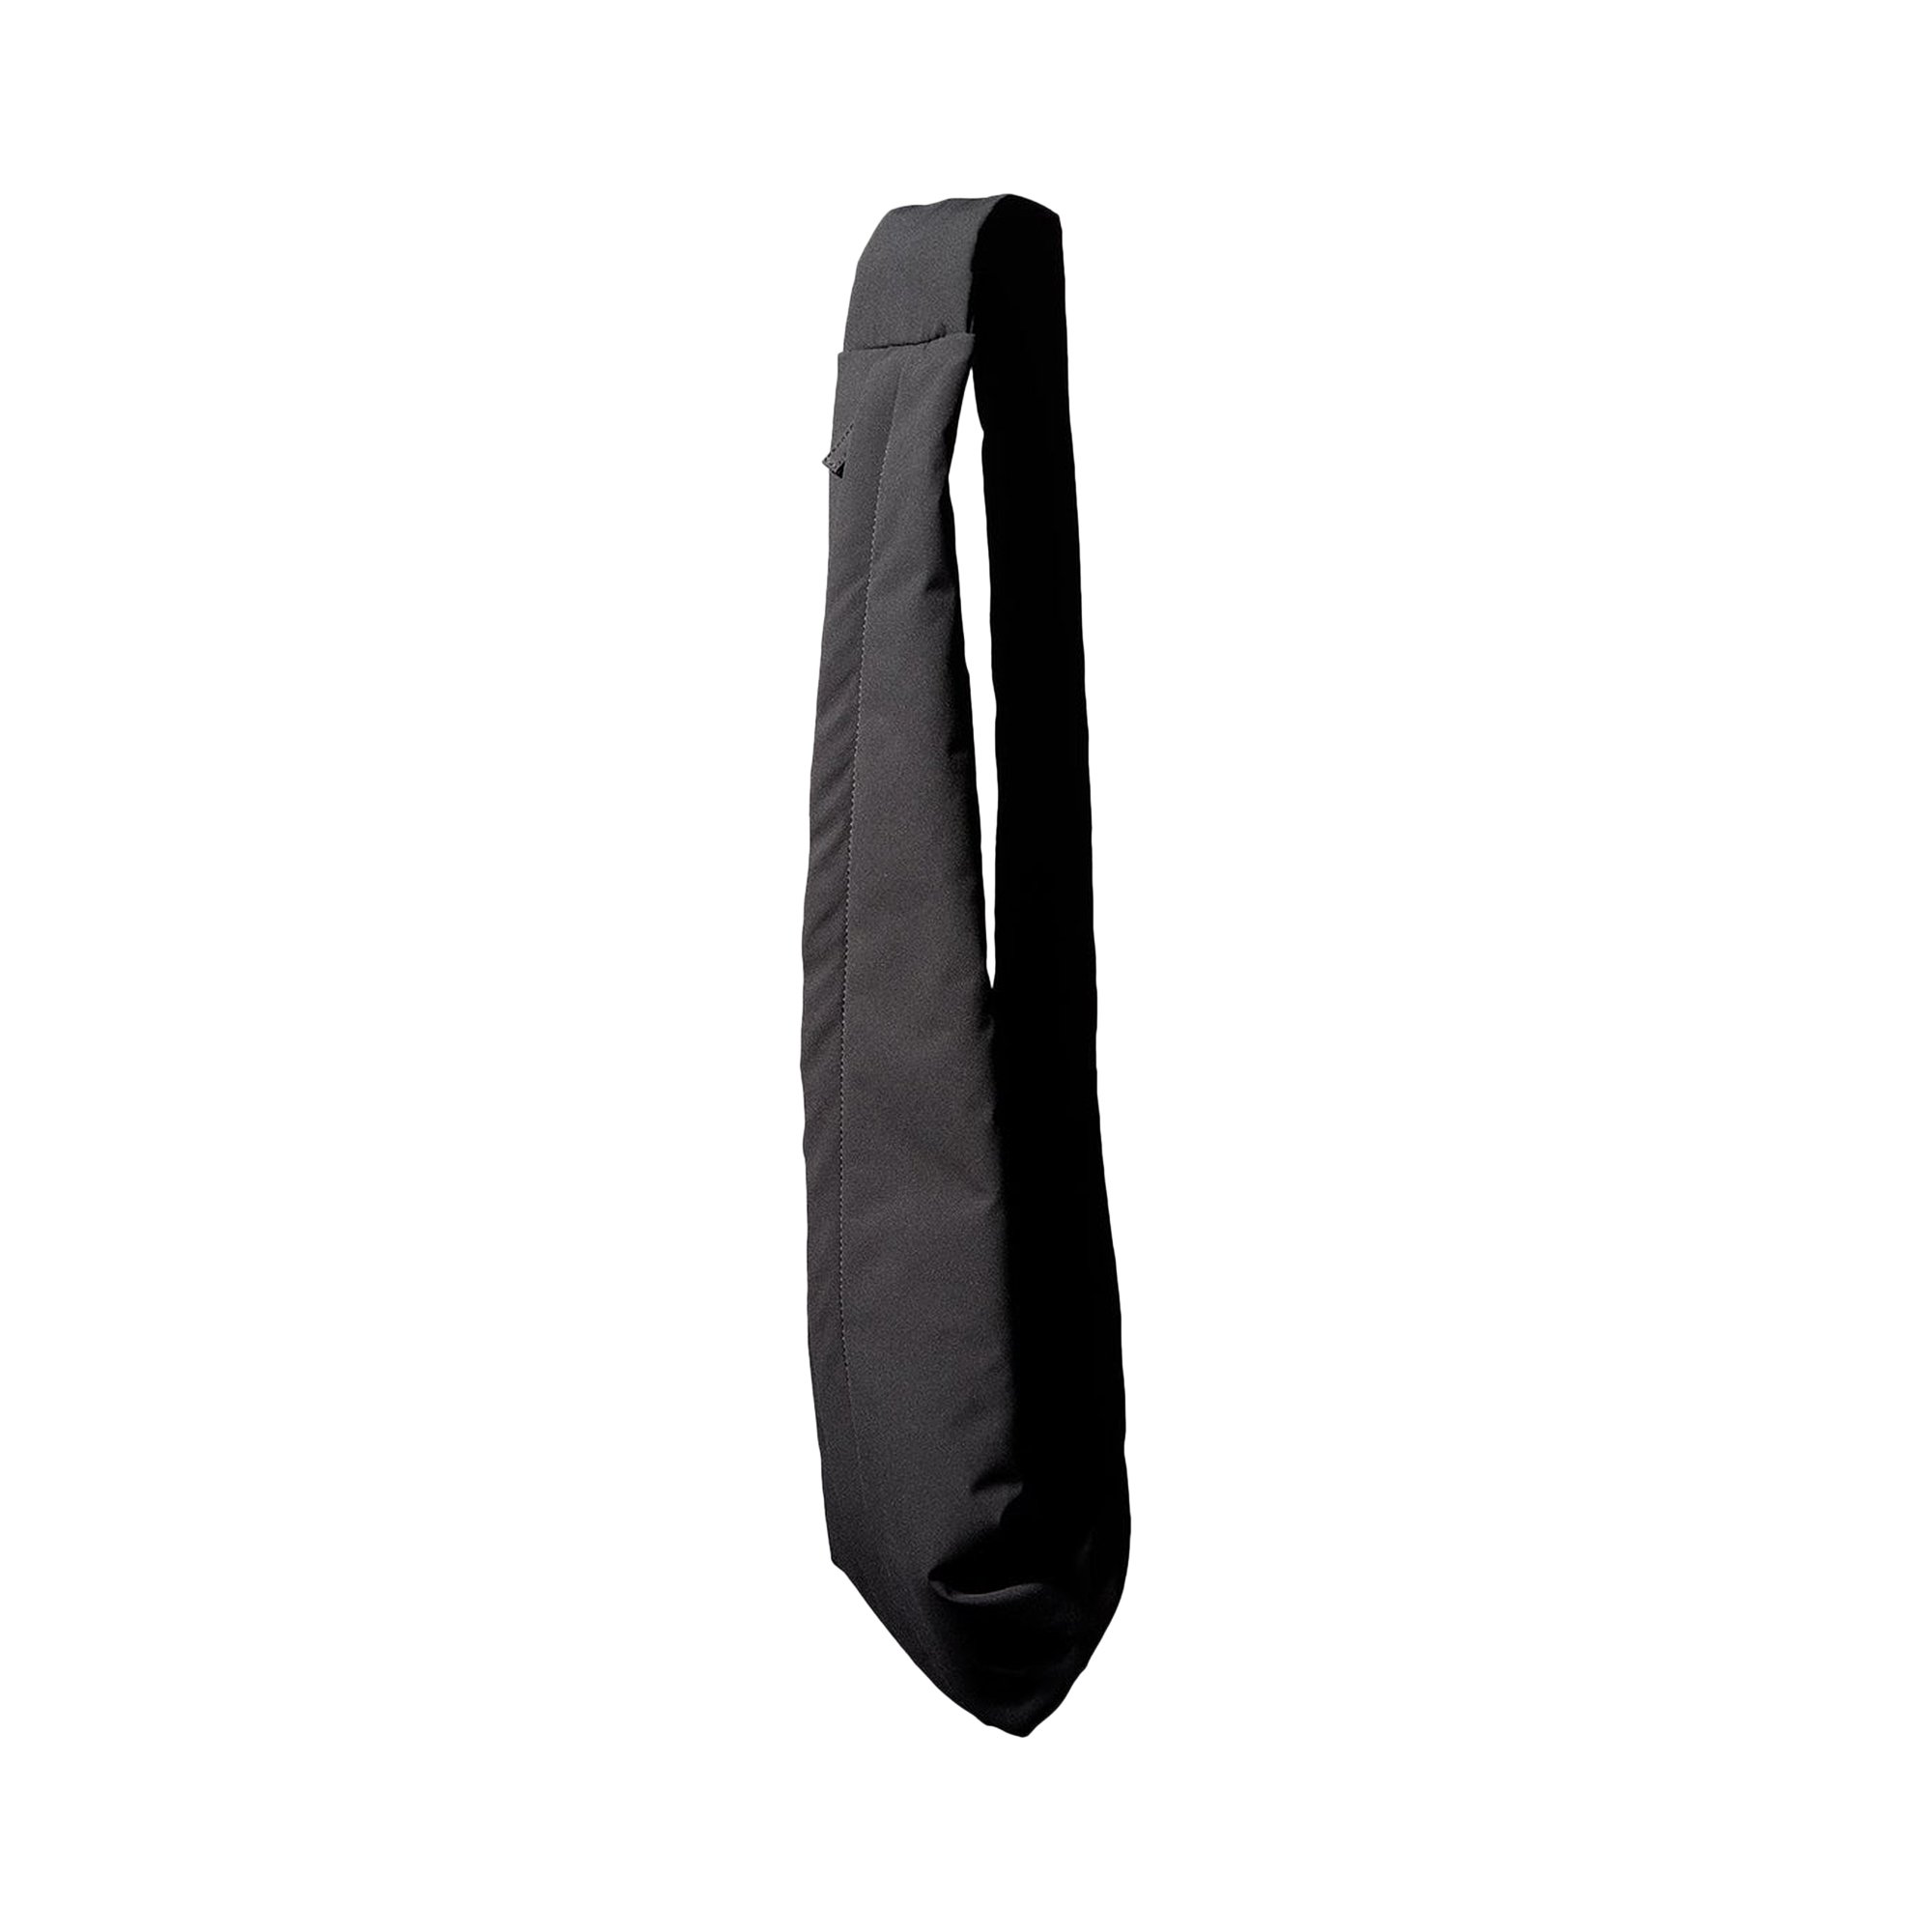 Yeezy Gap Engineered by Balenciaga Snake Bag 'Black'